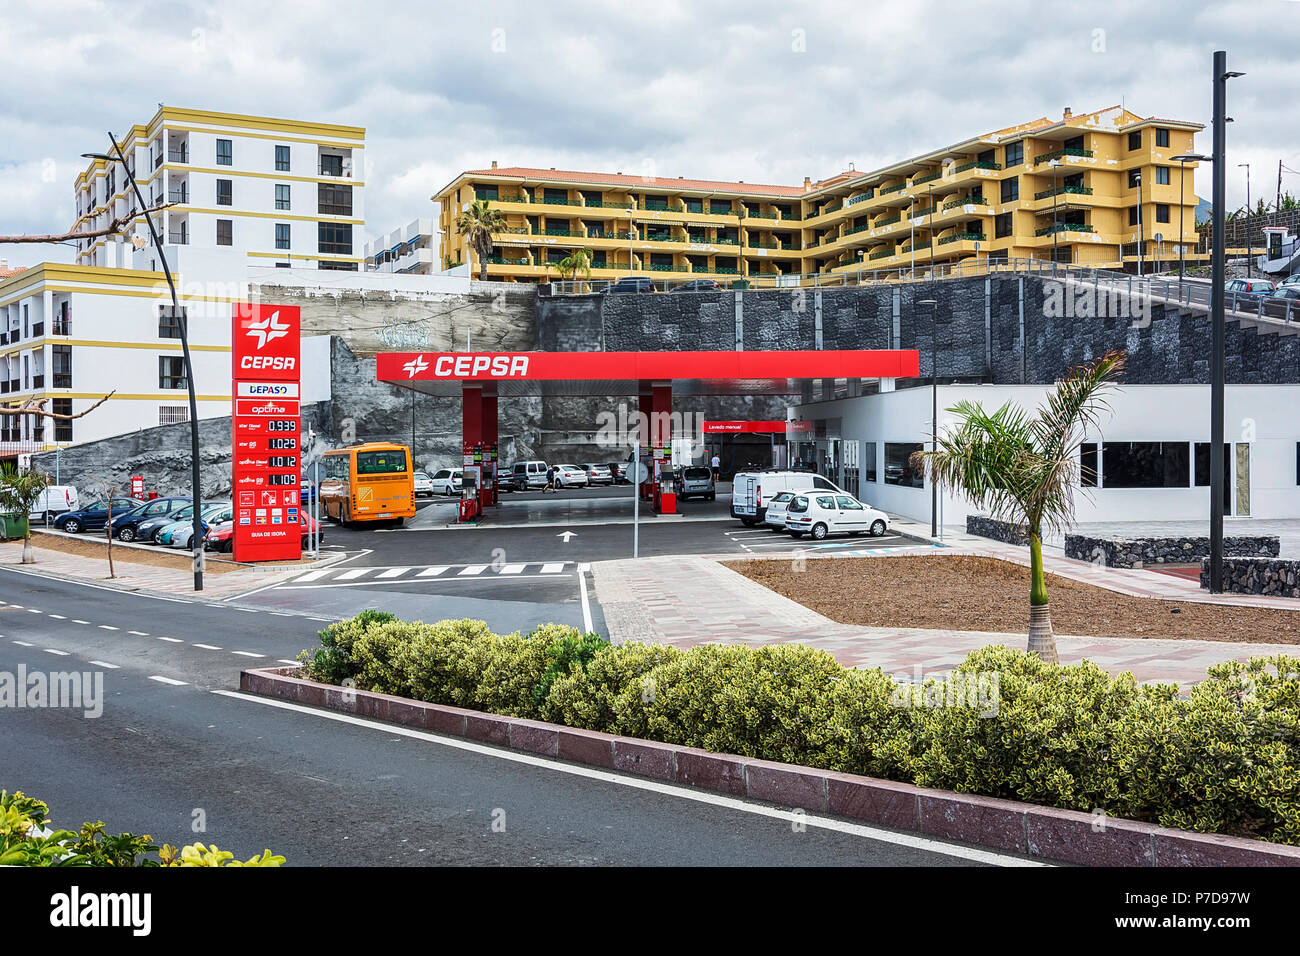 Spain, Tenerife - May 08, 2018: Car refueling station CEPSA. CEPSA is a Spanish petrochemical corporation. Stock Photo